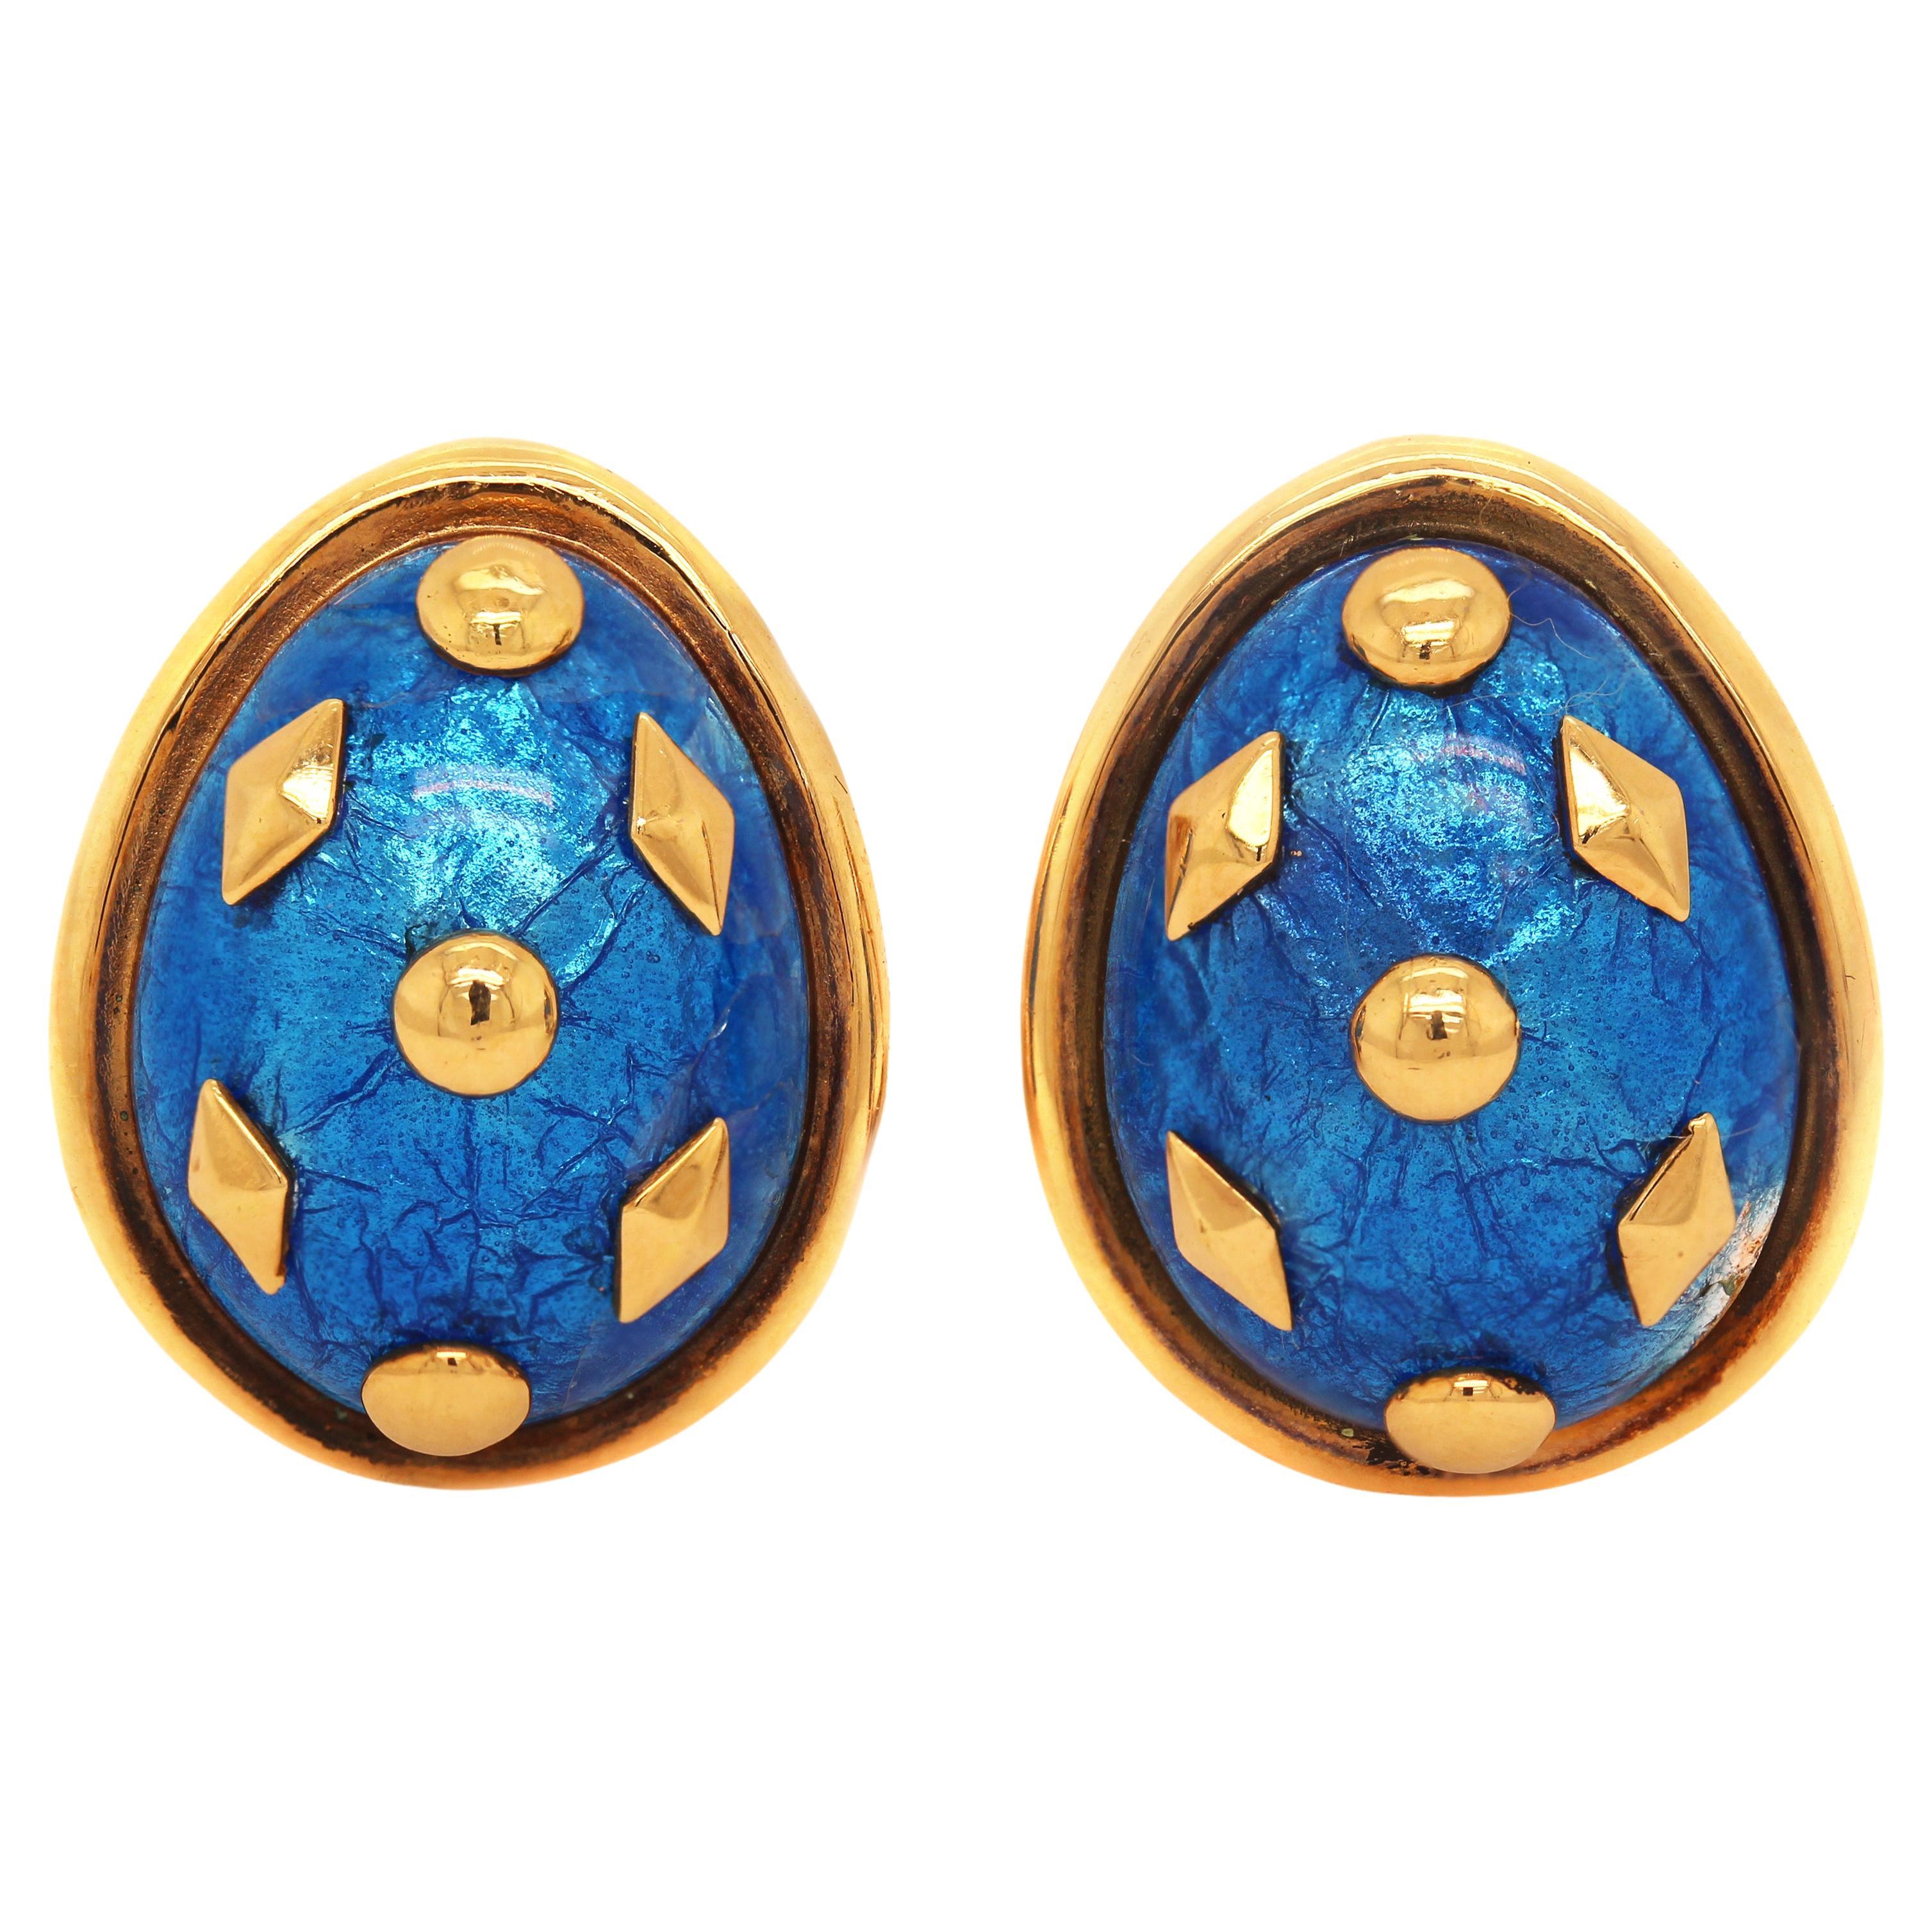 Tiffany & Co. Schlumberger Clips d'oreilles en or 18 carats, émail bleu à pois